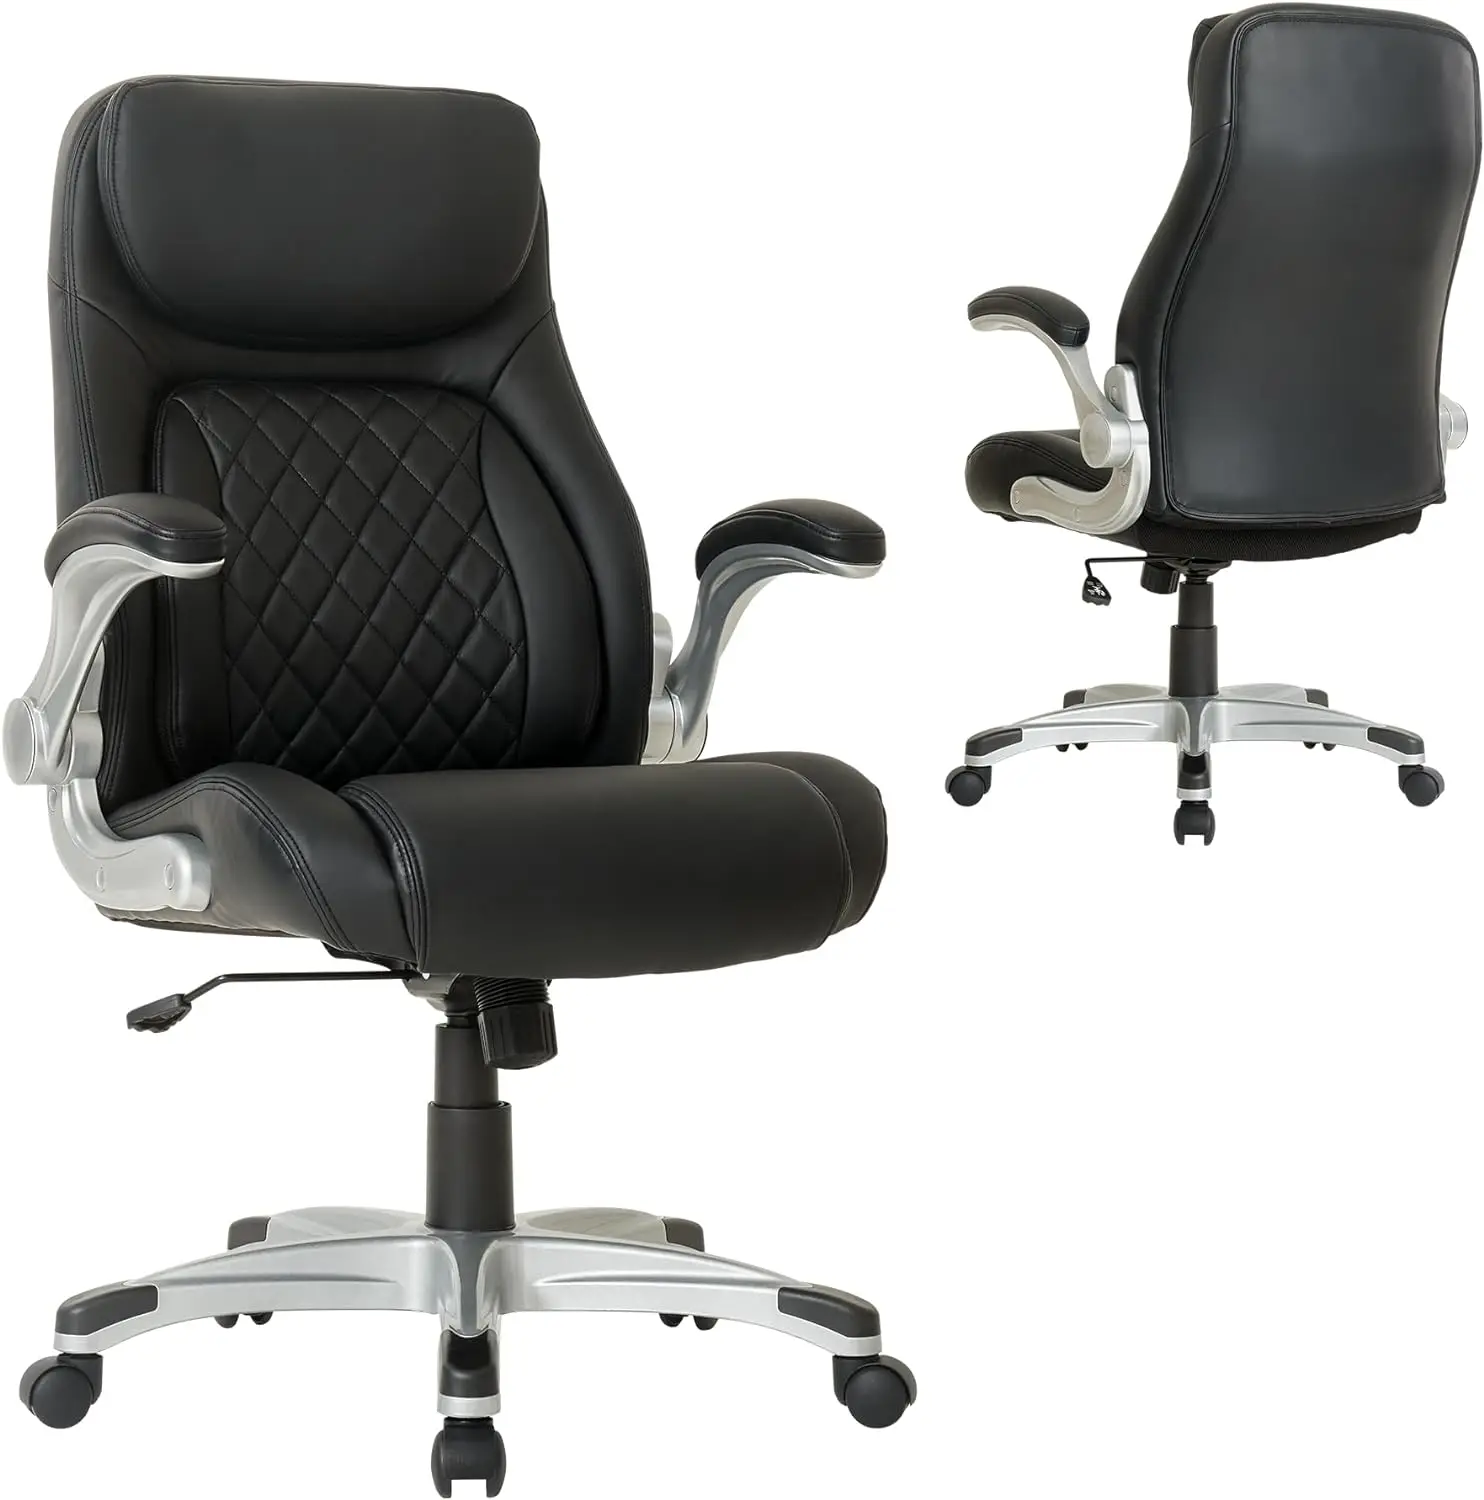 

Nouhaus +Posture Ergonomic PU Leather Office Chair. Click5 Lumbar Support with FlipAdjust Armrests. Modern Executive Chair